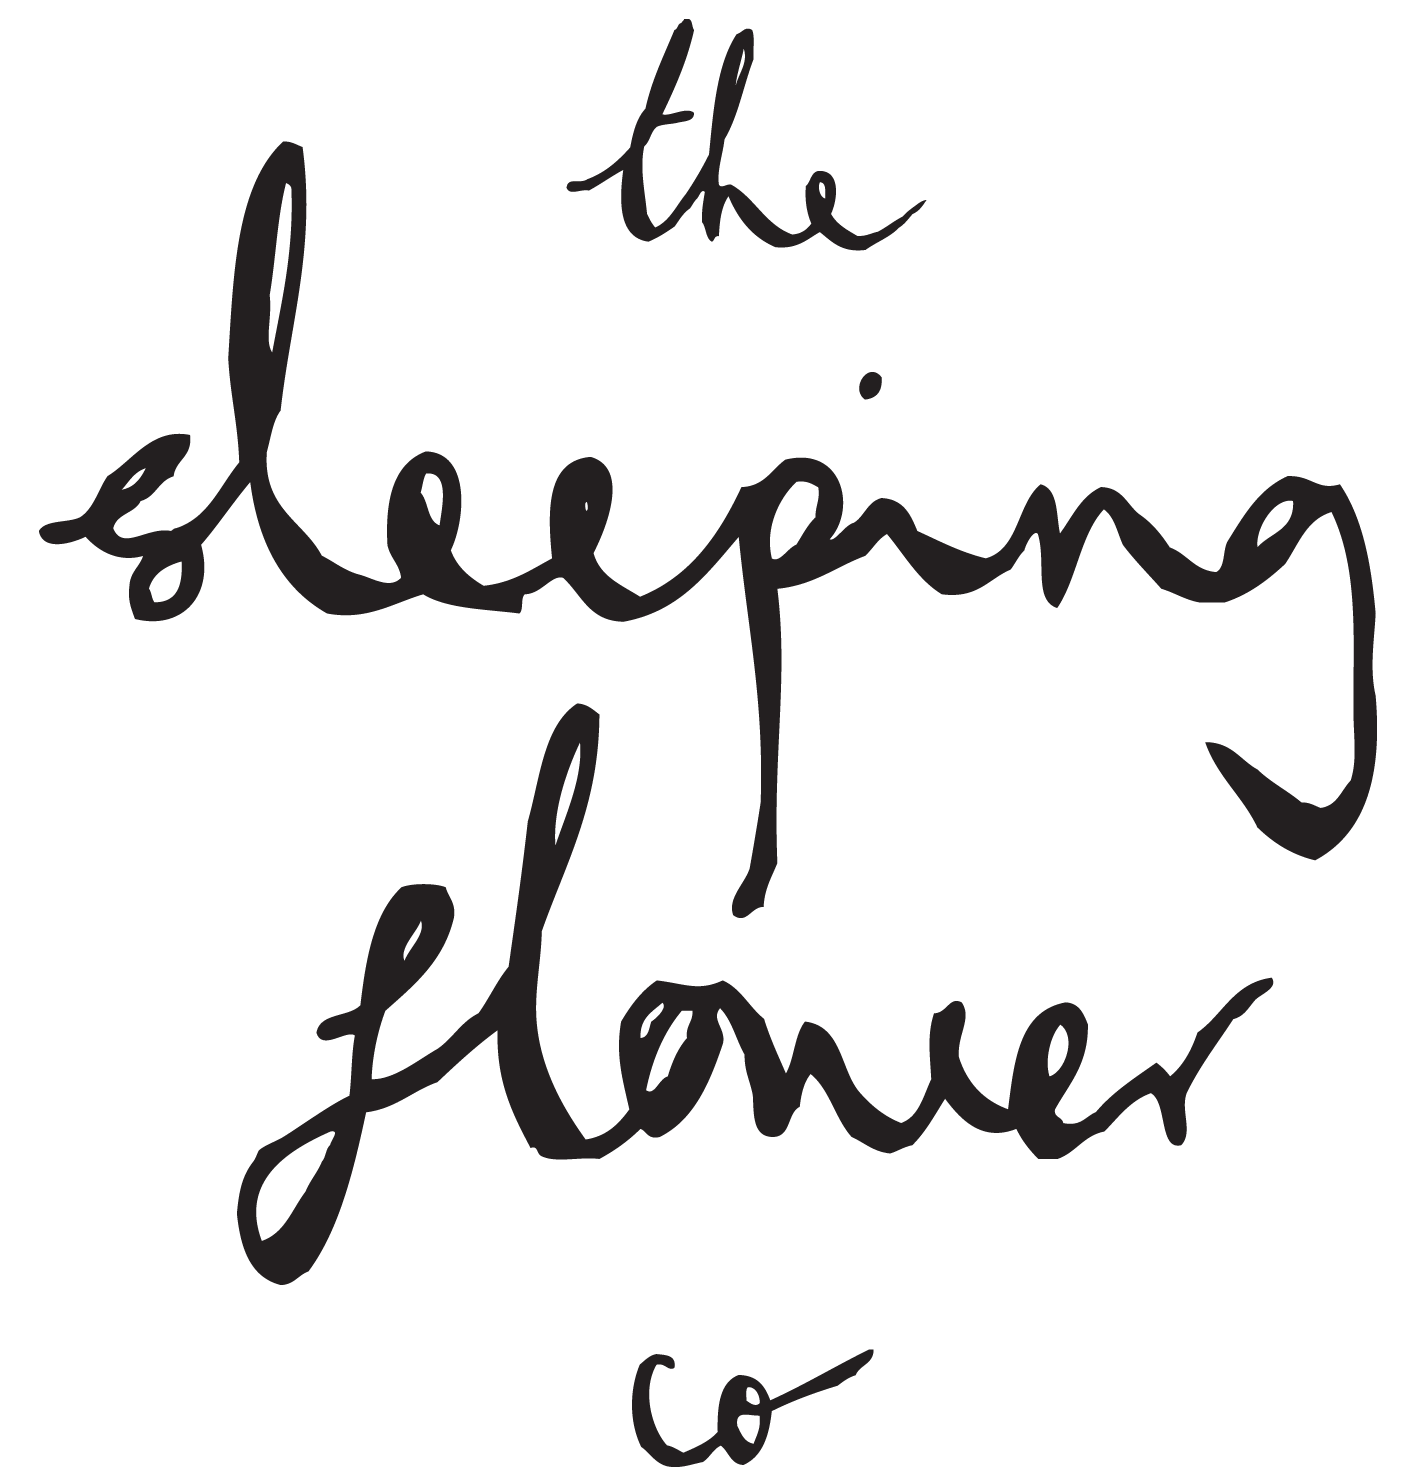 The Sleeping Flower Company